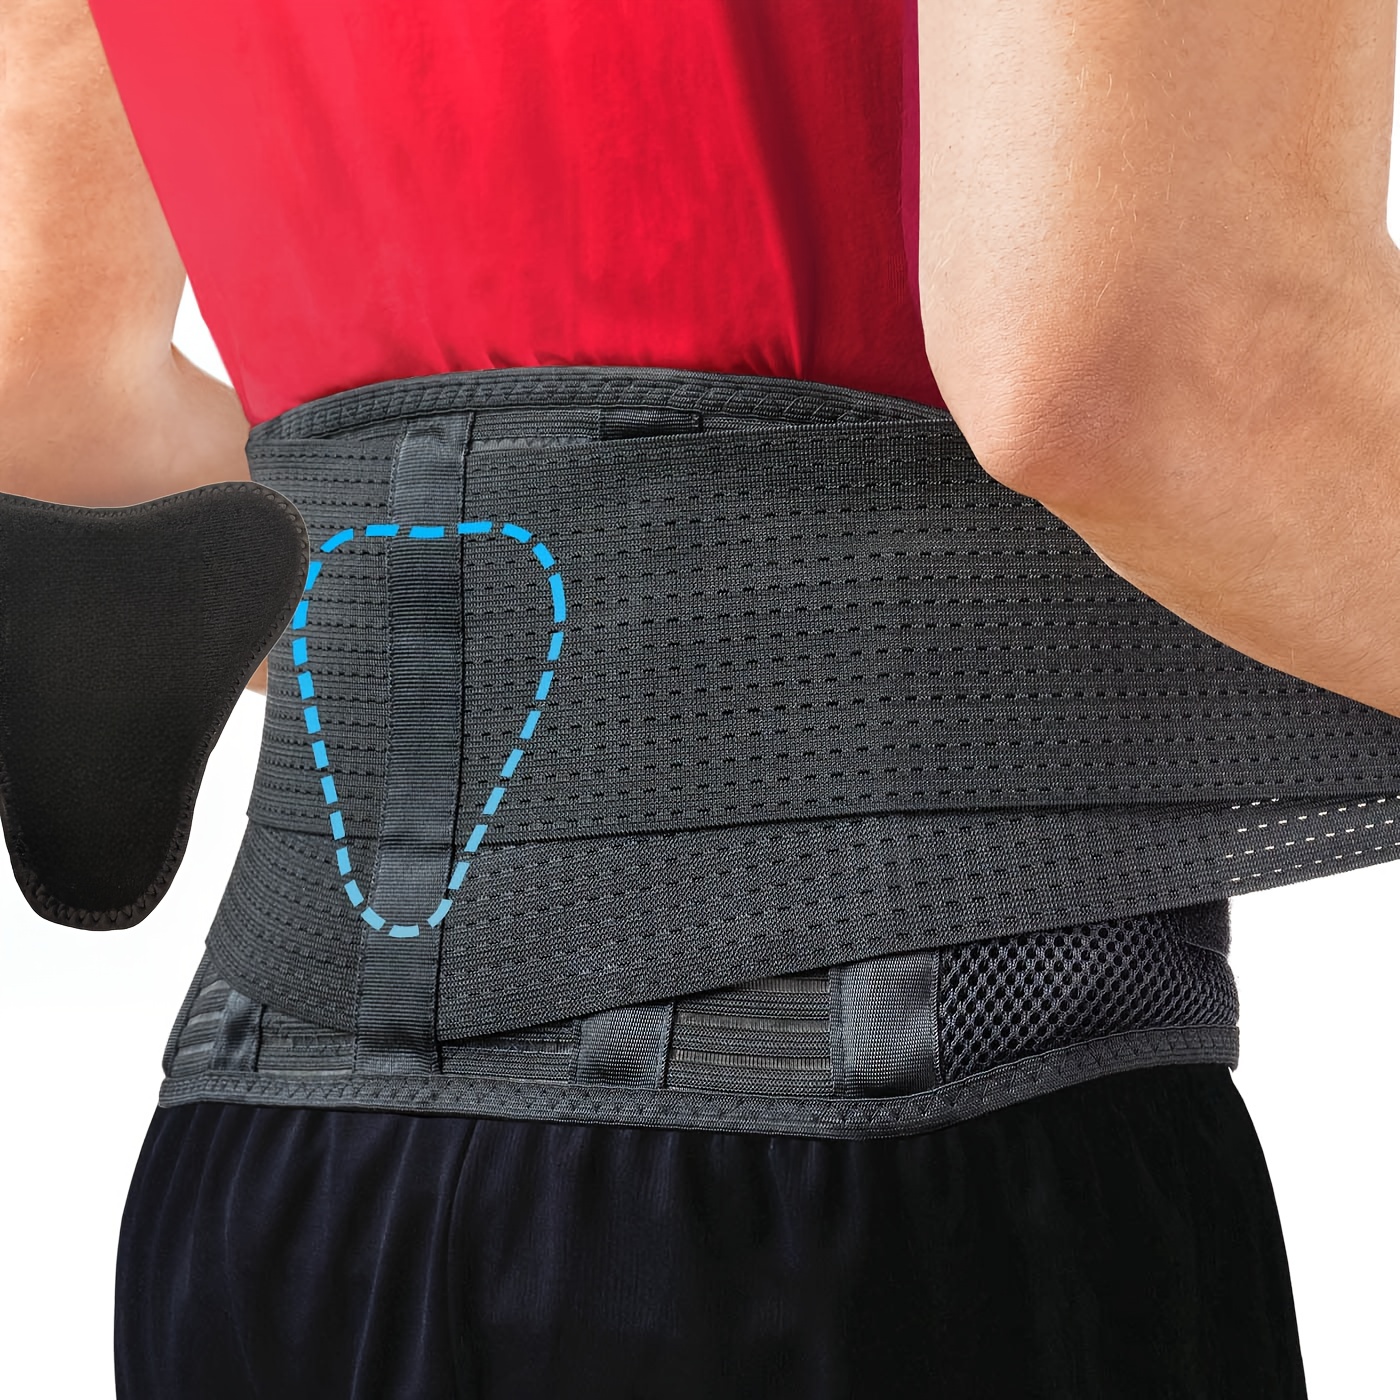 Back Brace For Men/Women, Lower Back Waist Sports Belt With Lumbar Pad -  Adjustable Support Straps - Lower Back Brace For Work/Sports/Daily